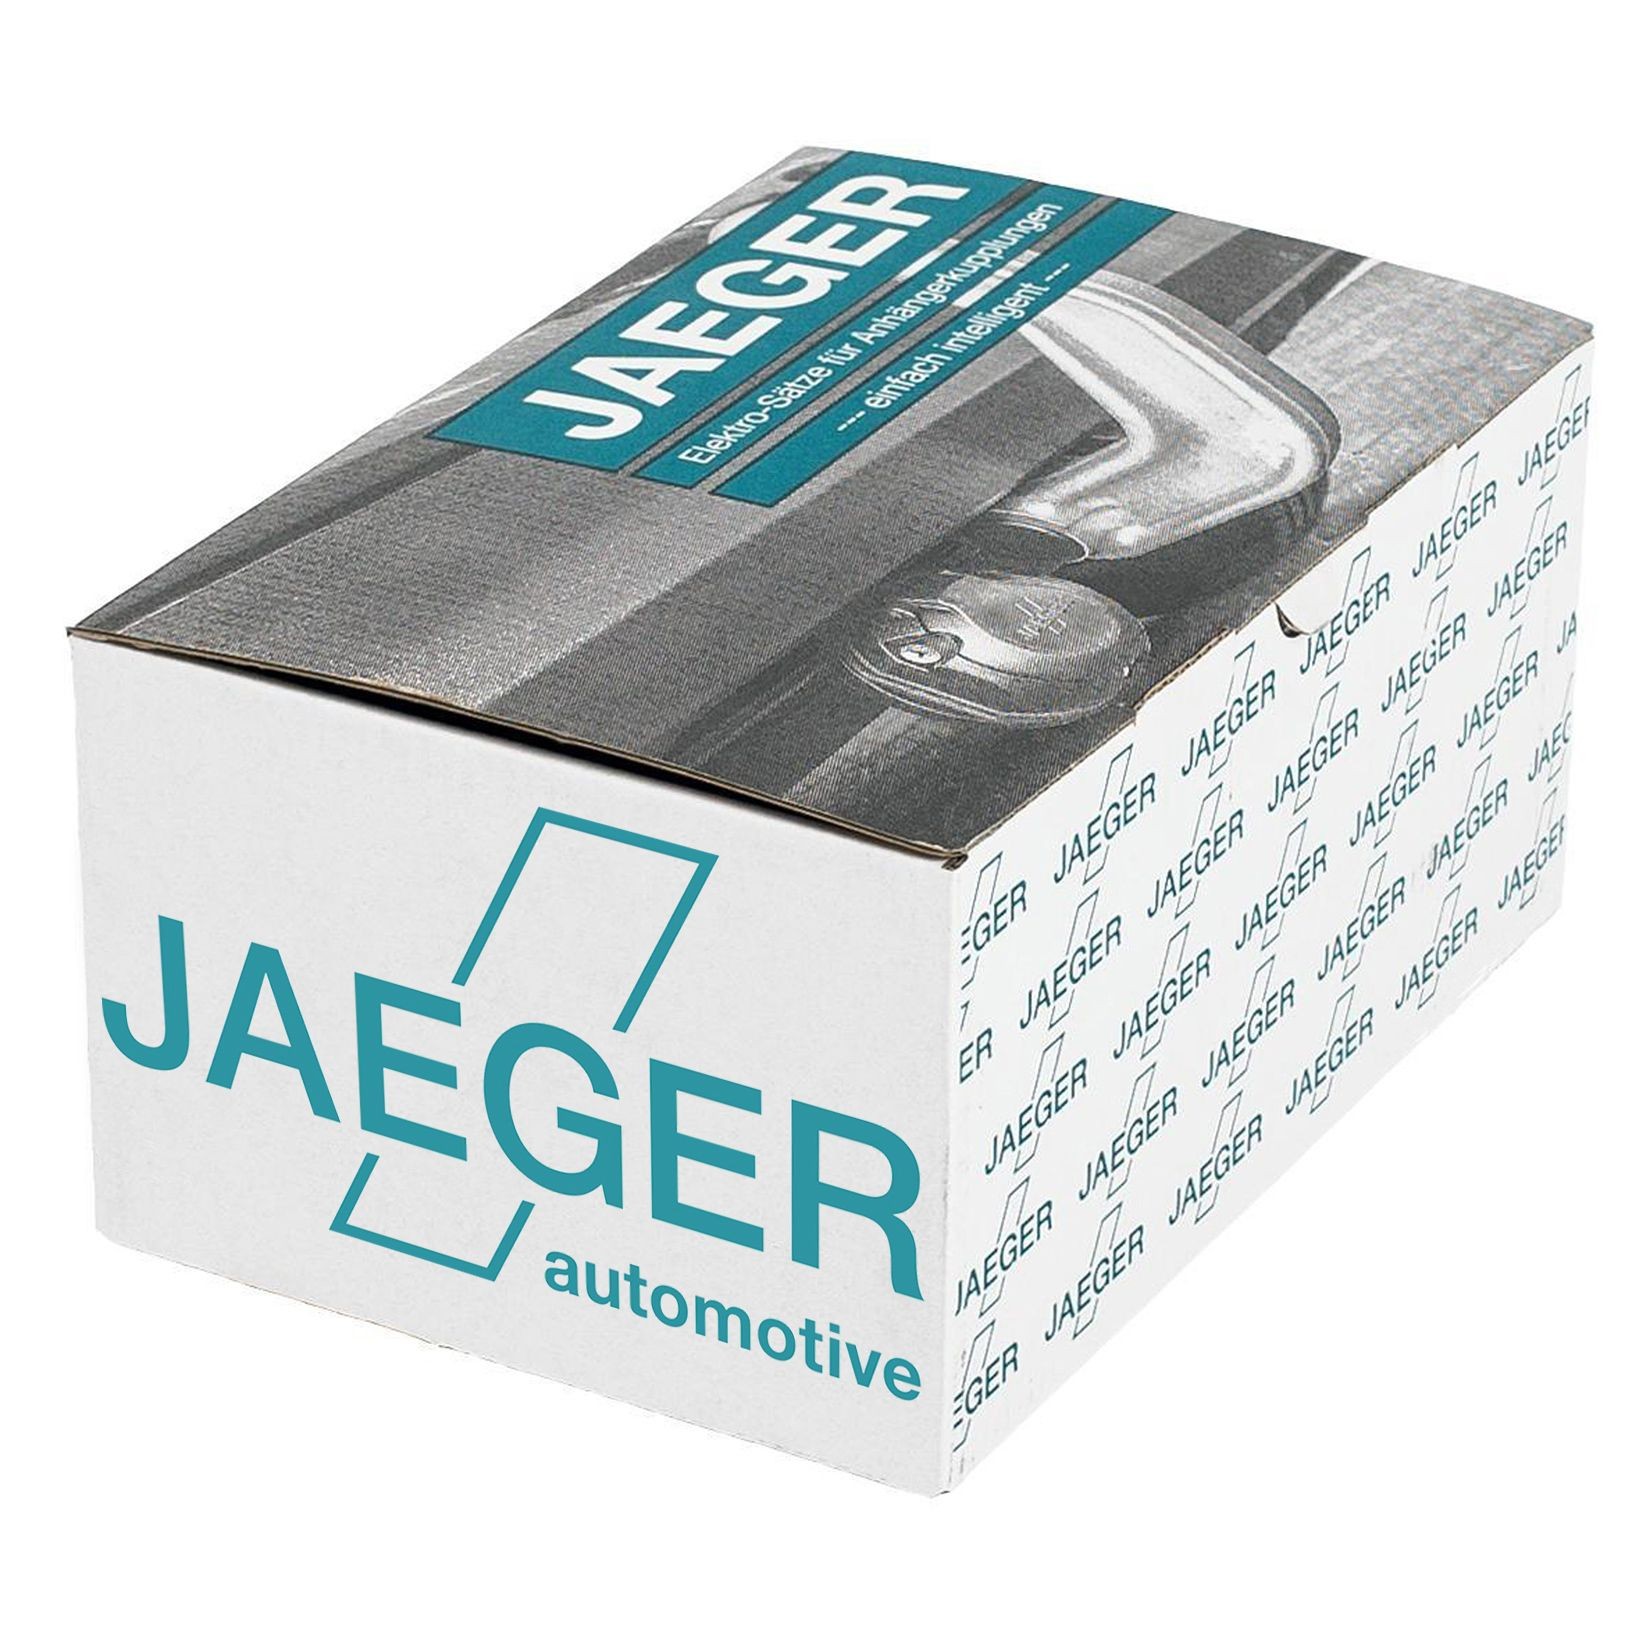 Ford FIESTA Towbar electric kit JAEGER 12060511 cheap